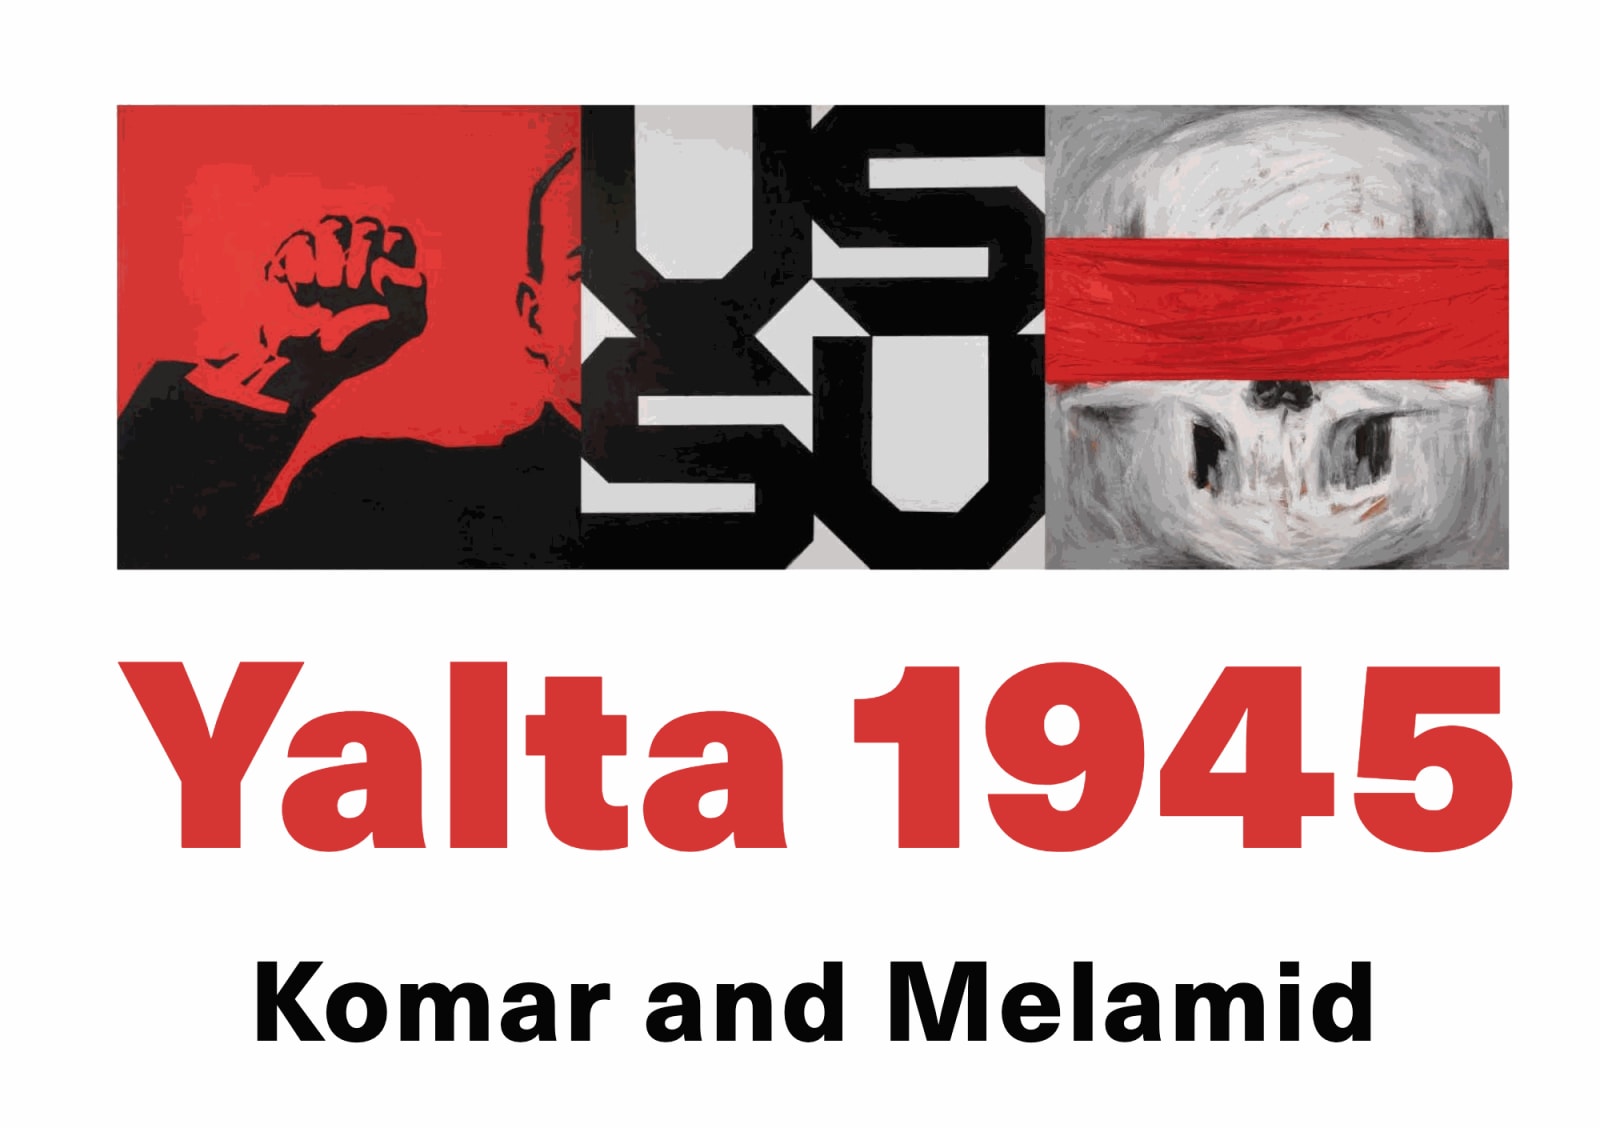 Komar and Melamid: Yalta 1945 Read it here